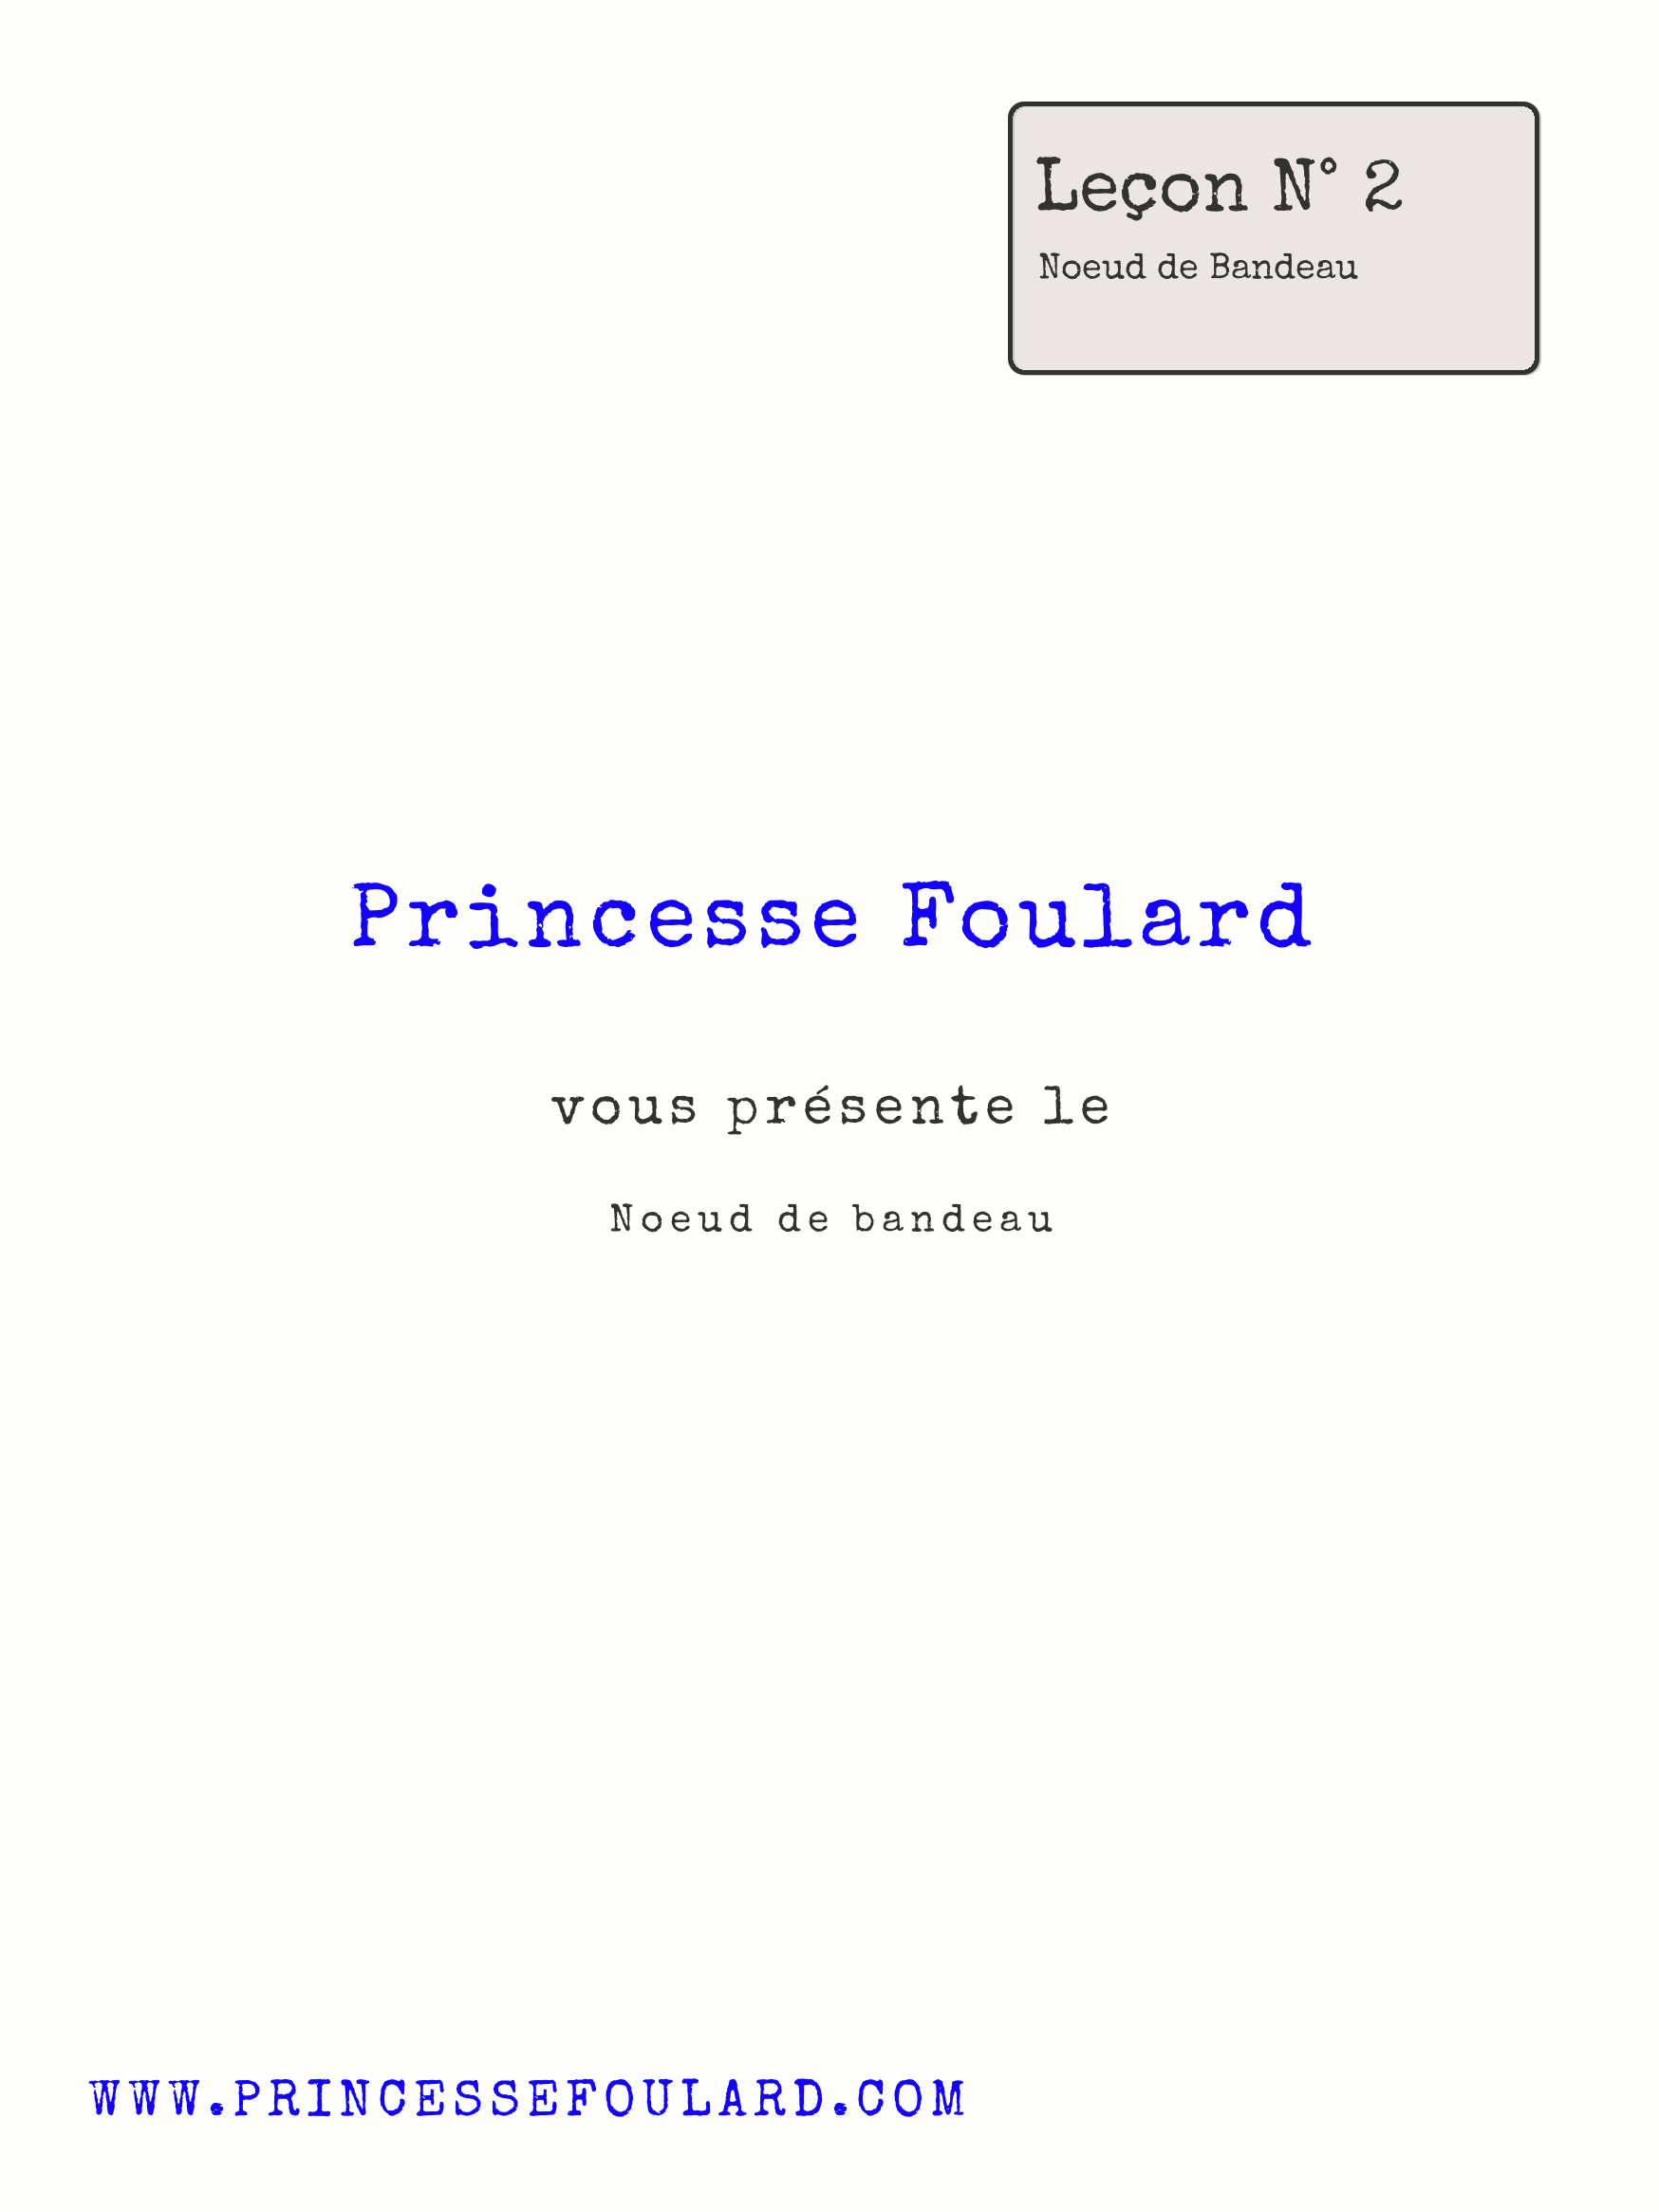 Tuto Noeud de Foulard en bandeau par "Princesse Foulard"